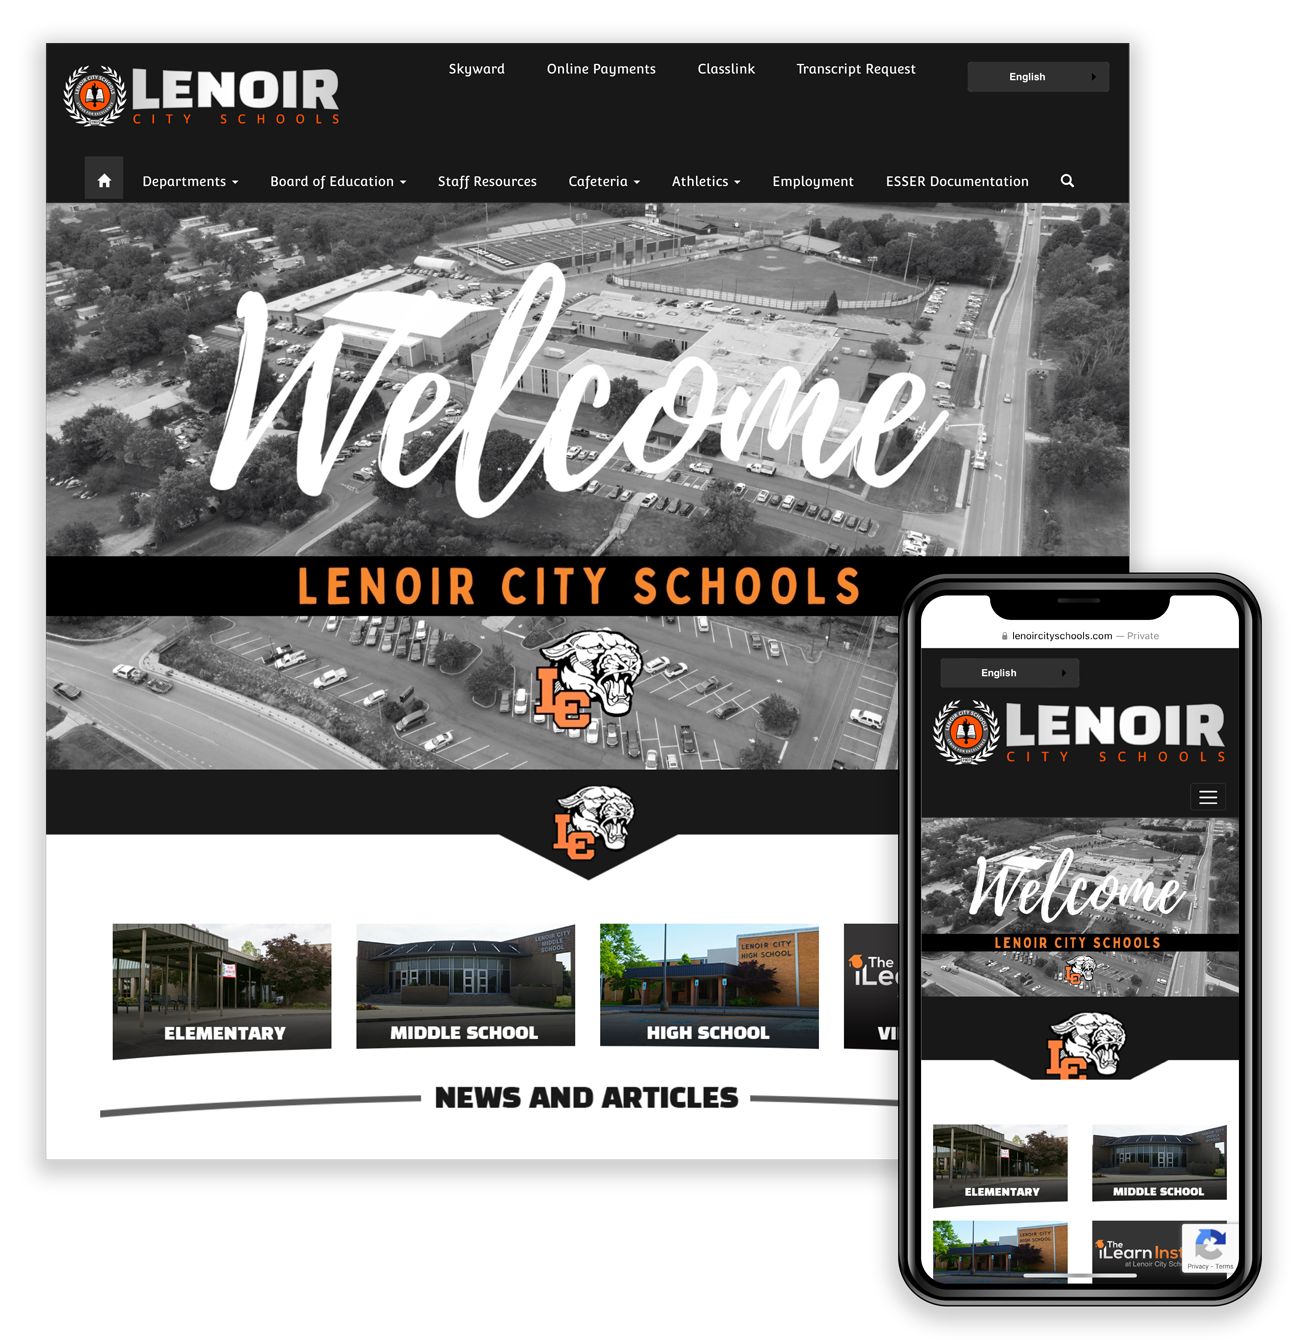 Lenoir City Schools website on web and mobile